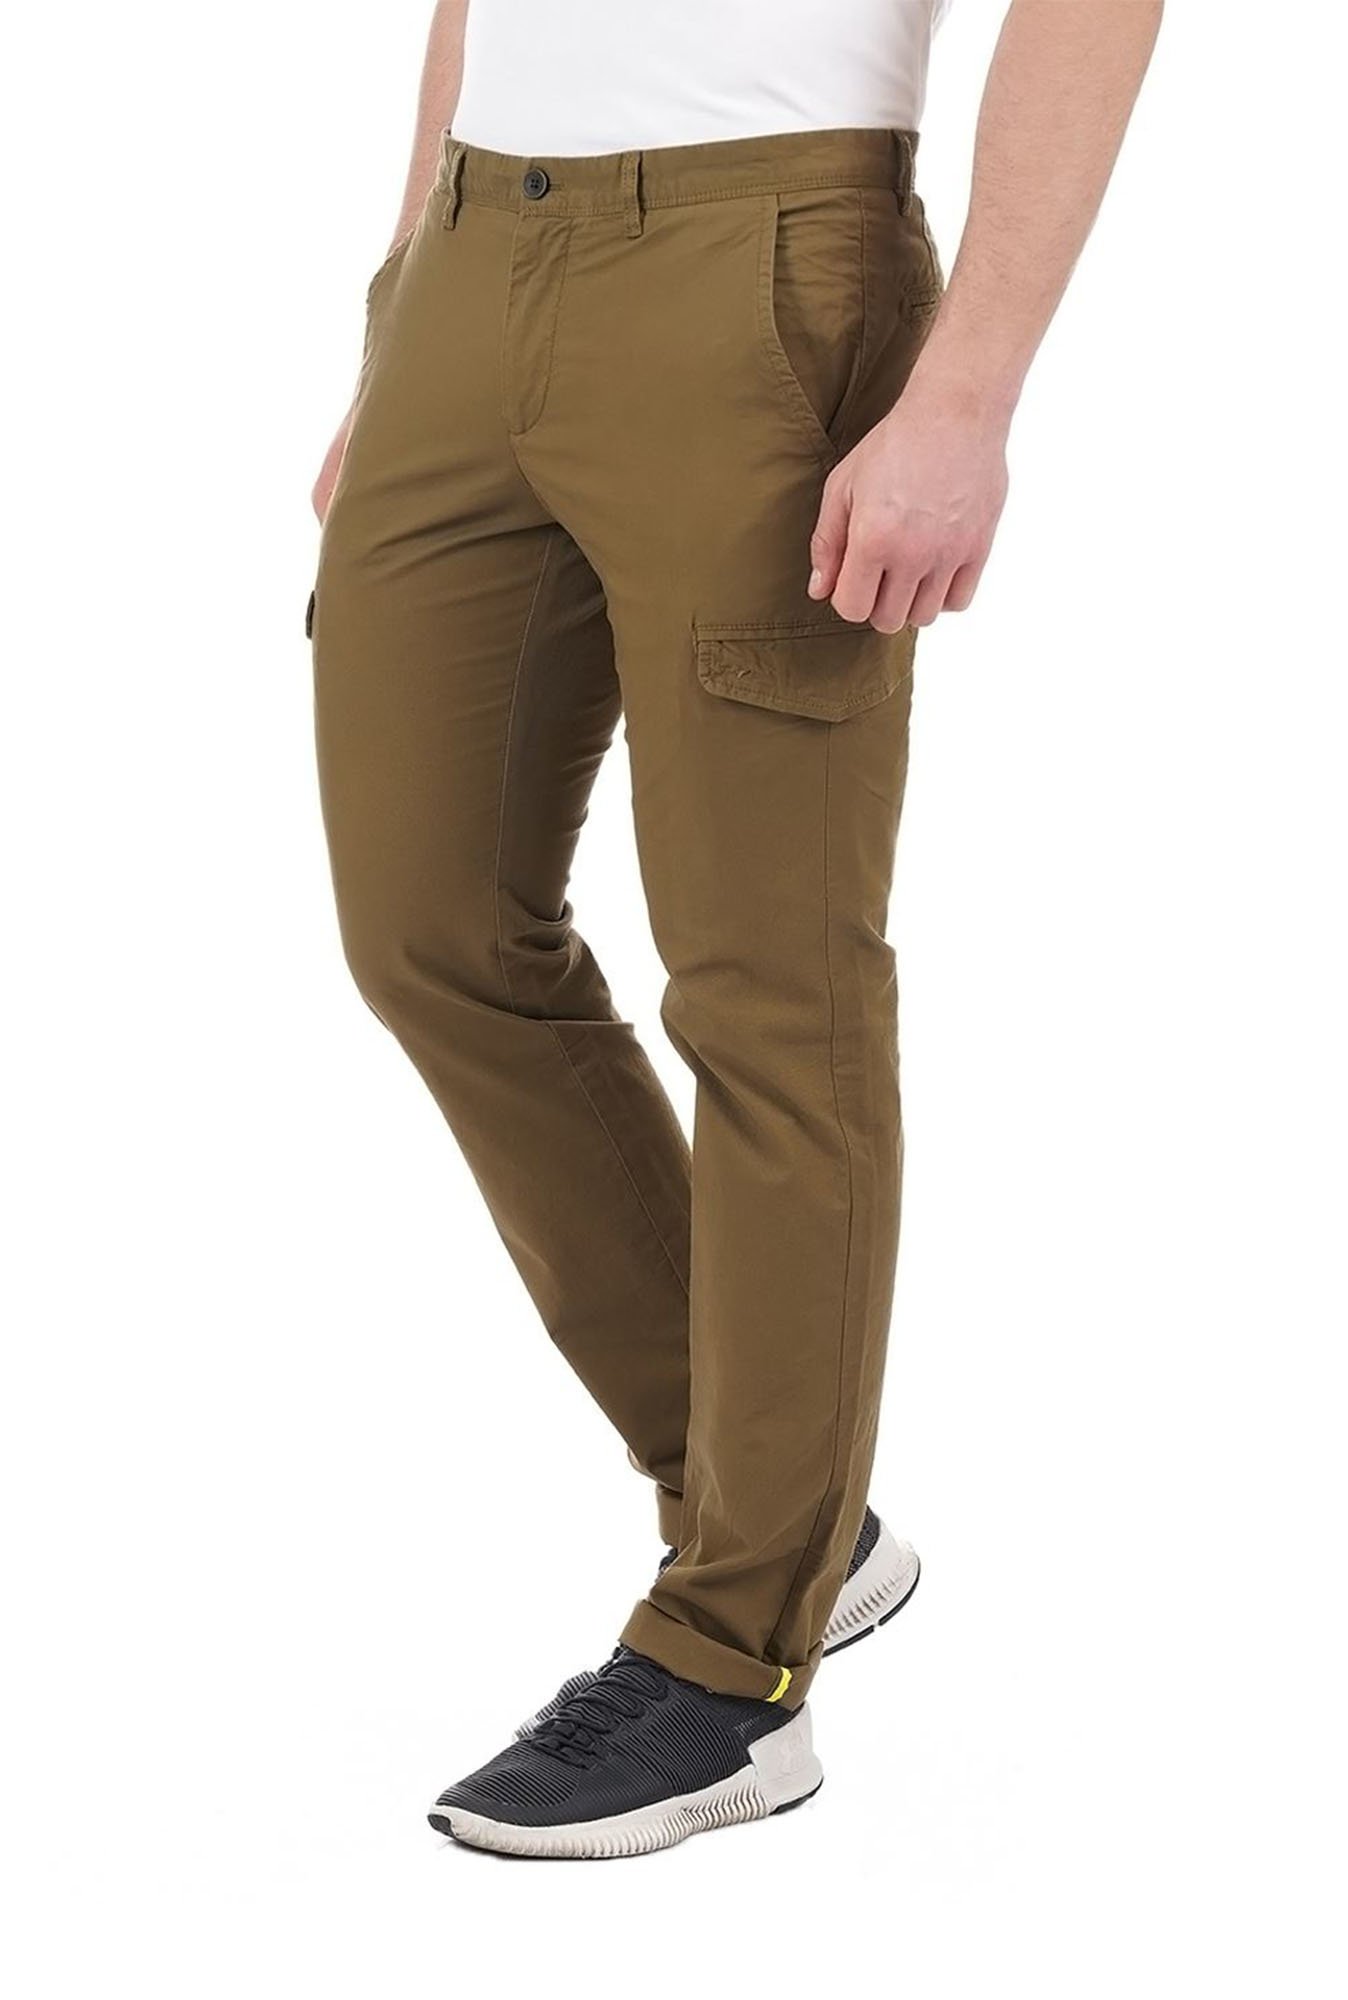 Buy Khaki Trousers  Pants for Boys by INDIAN TERRAIN BOYS Online  Ajiocom